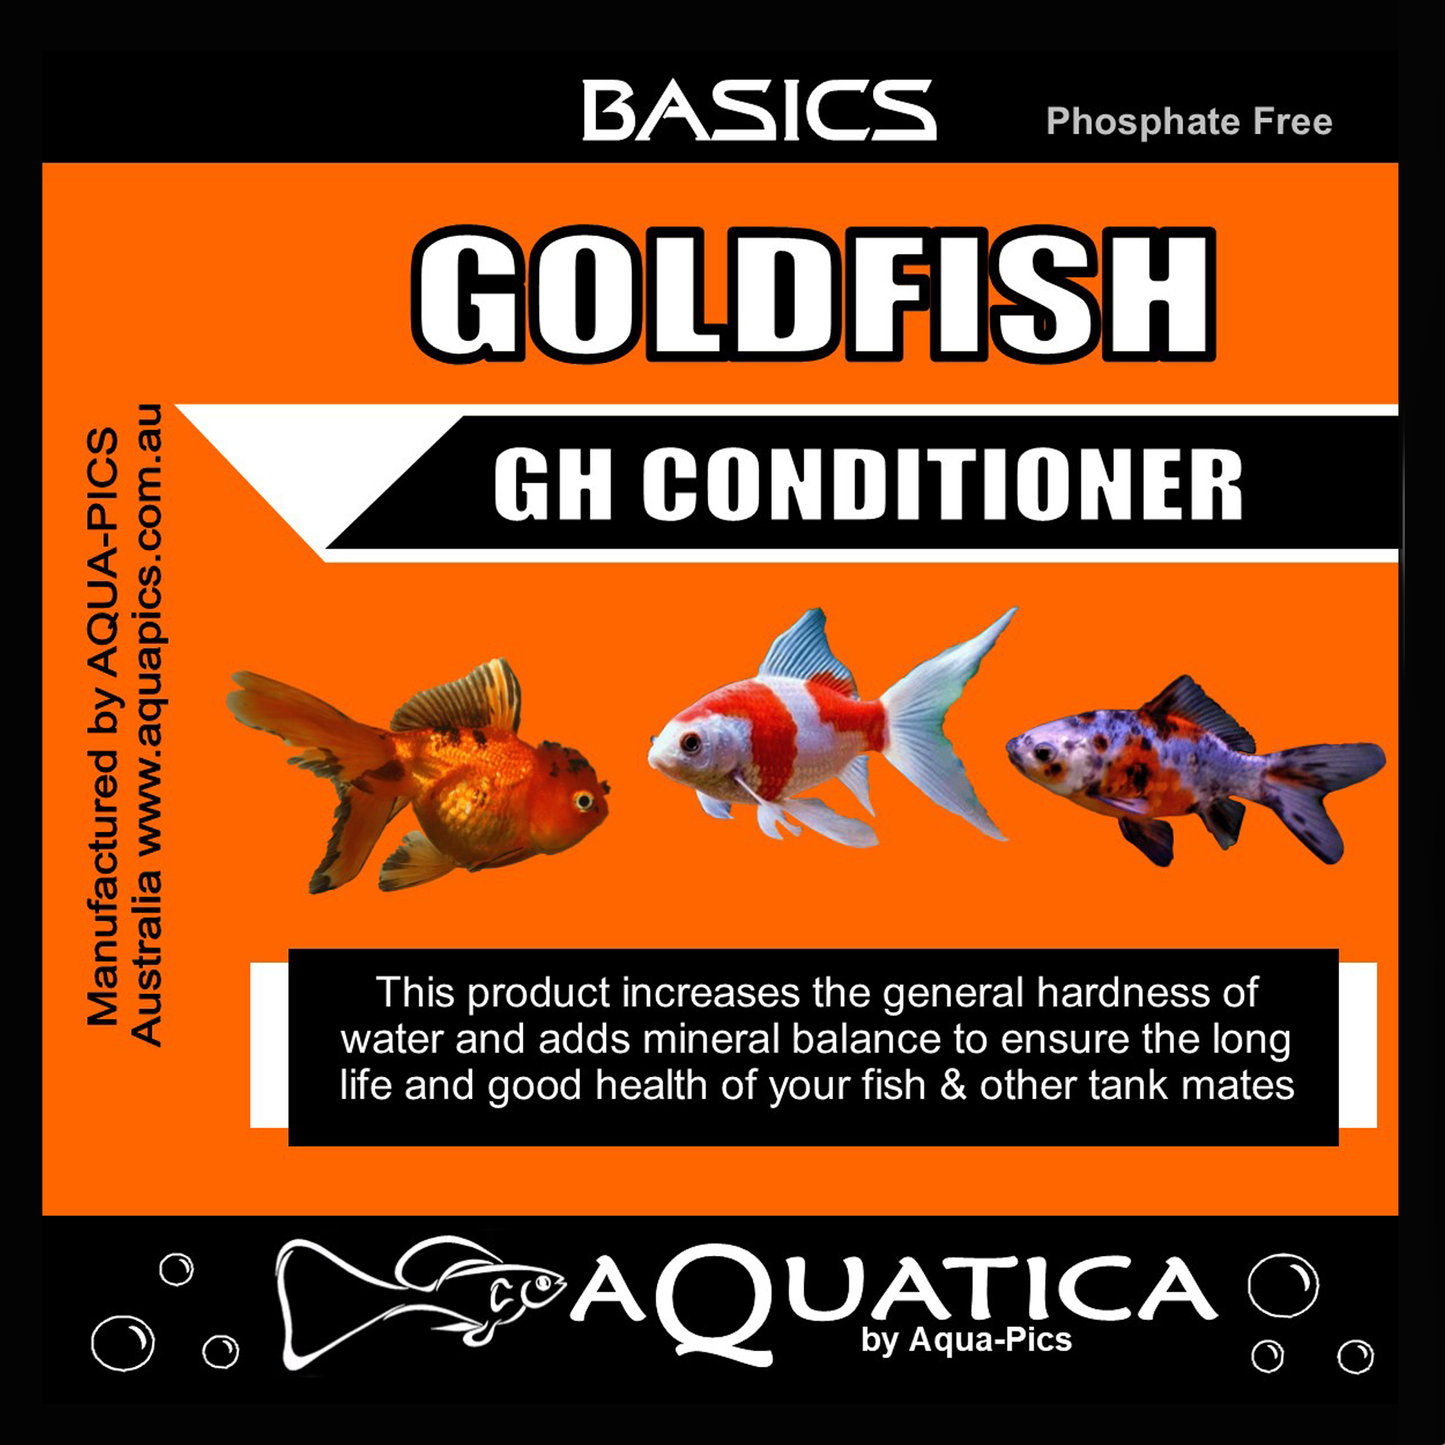 Aquatica Basics Goldfish GH Conditioner 500g bag